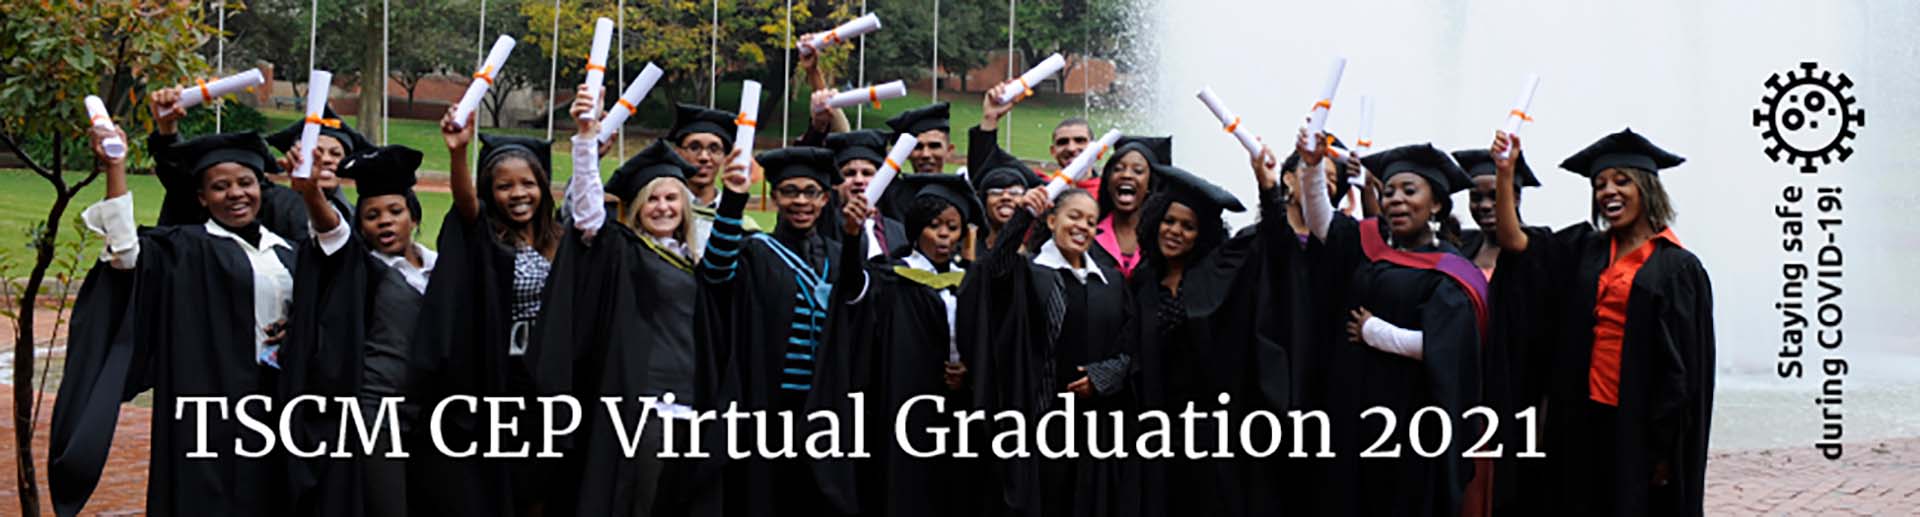 TSCM CEP Virtual Graduation 2021